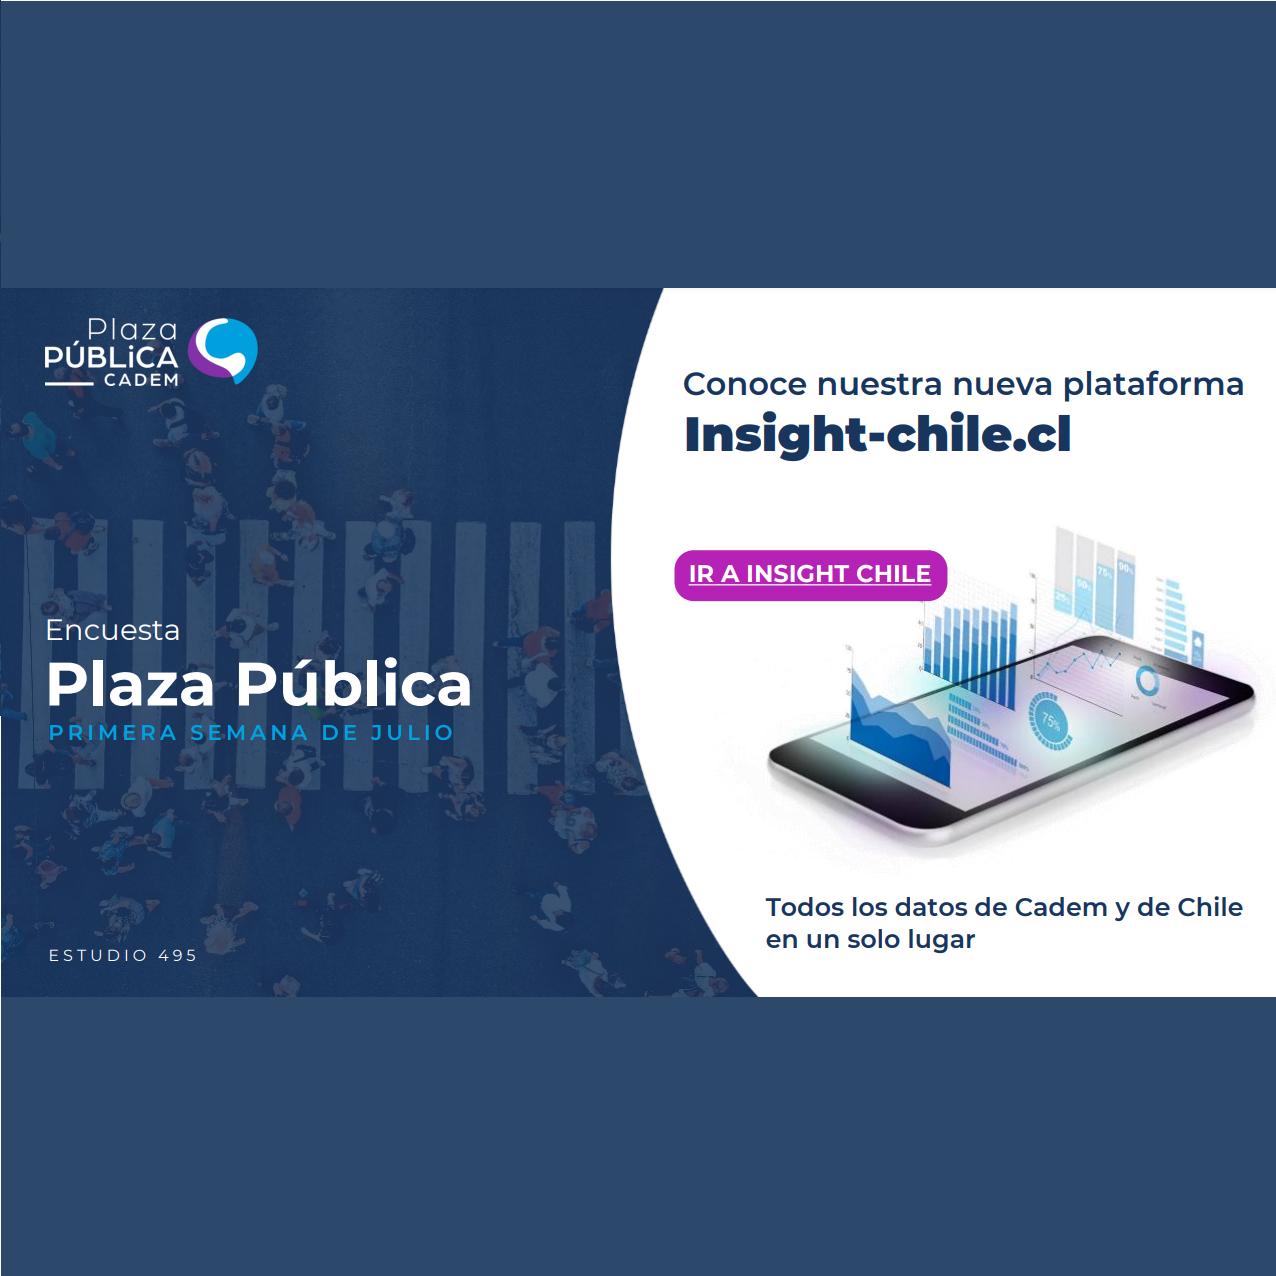 Encuesta Plaza Pública – 1ra semana de julio